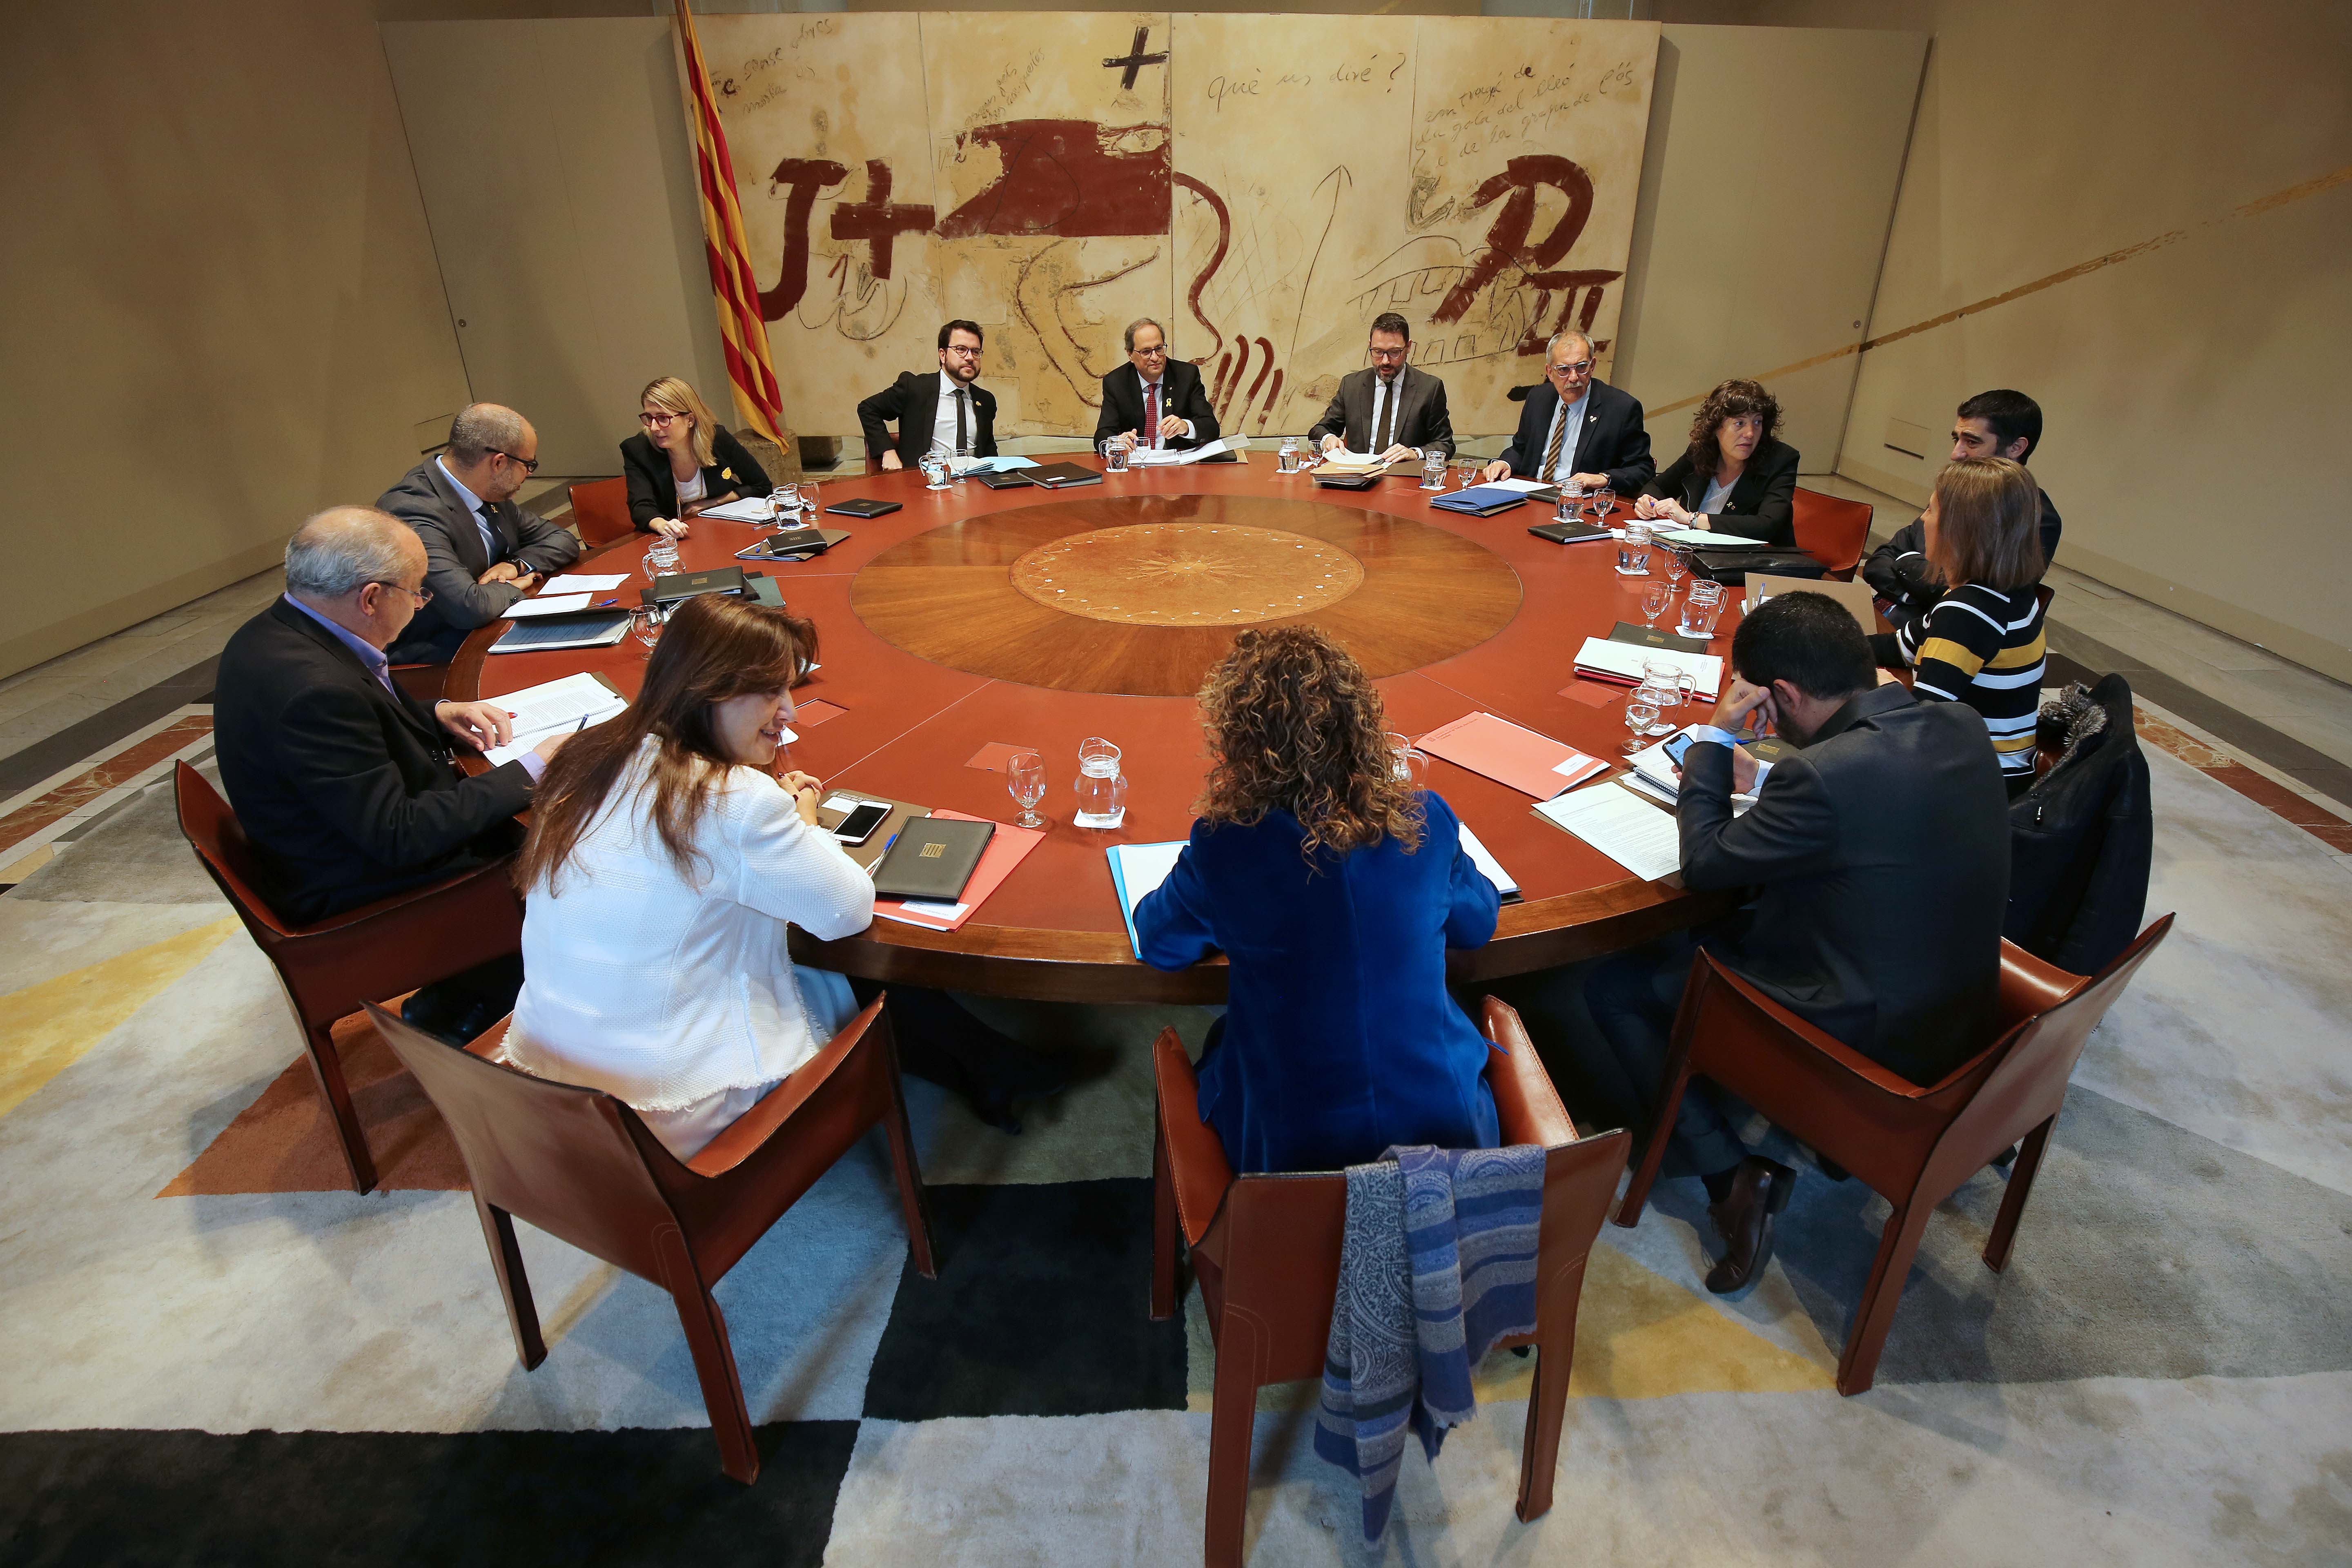 Spanish intervention in Catalonia had 1.8 billion euros' worth of impact on government